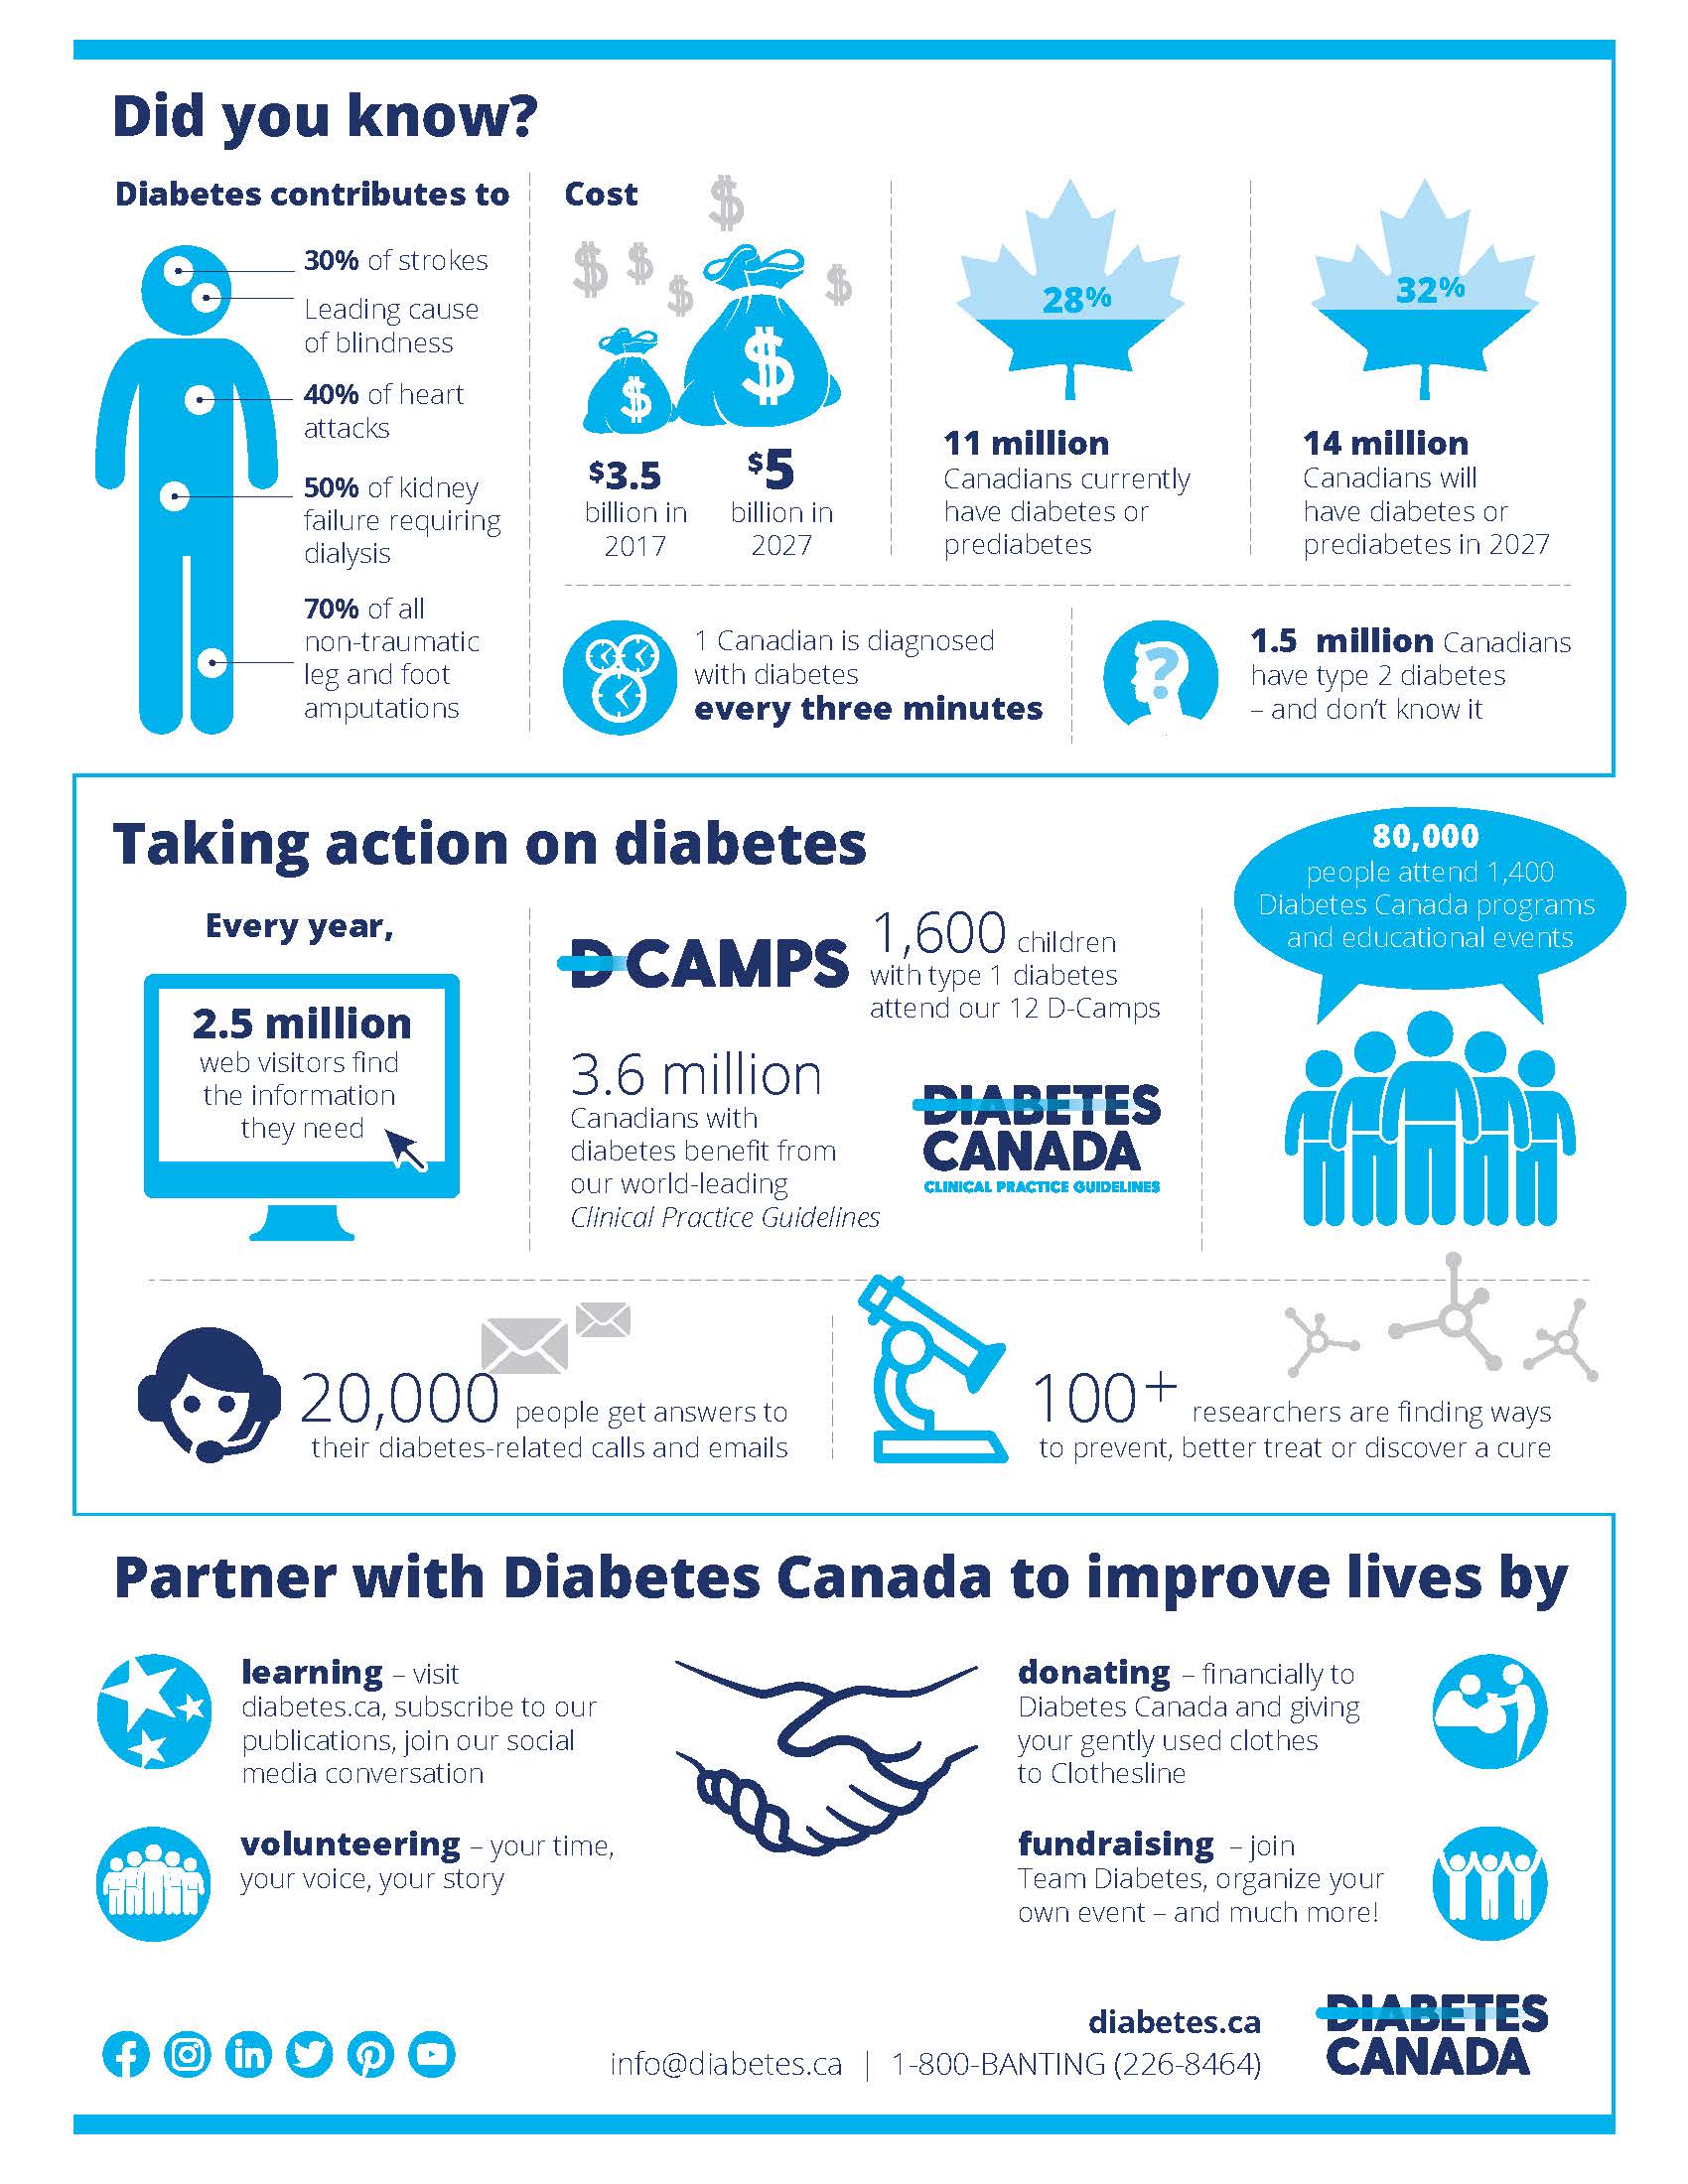 diabetes canada government funding